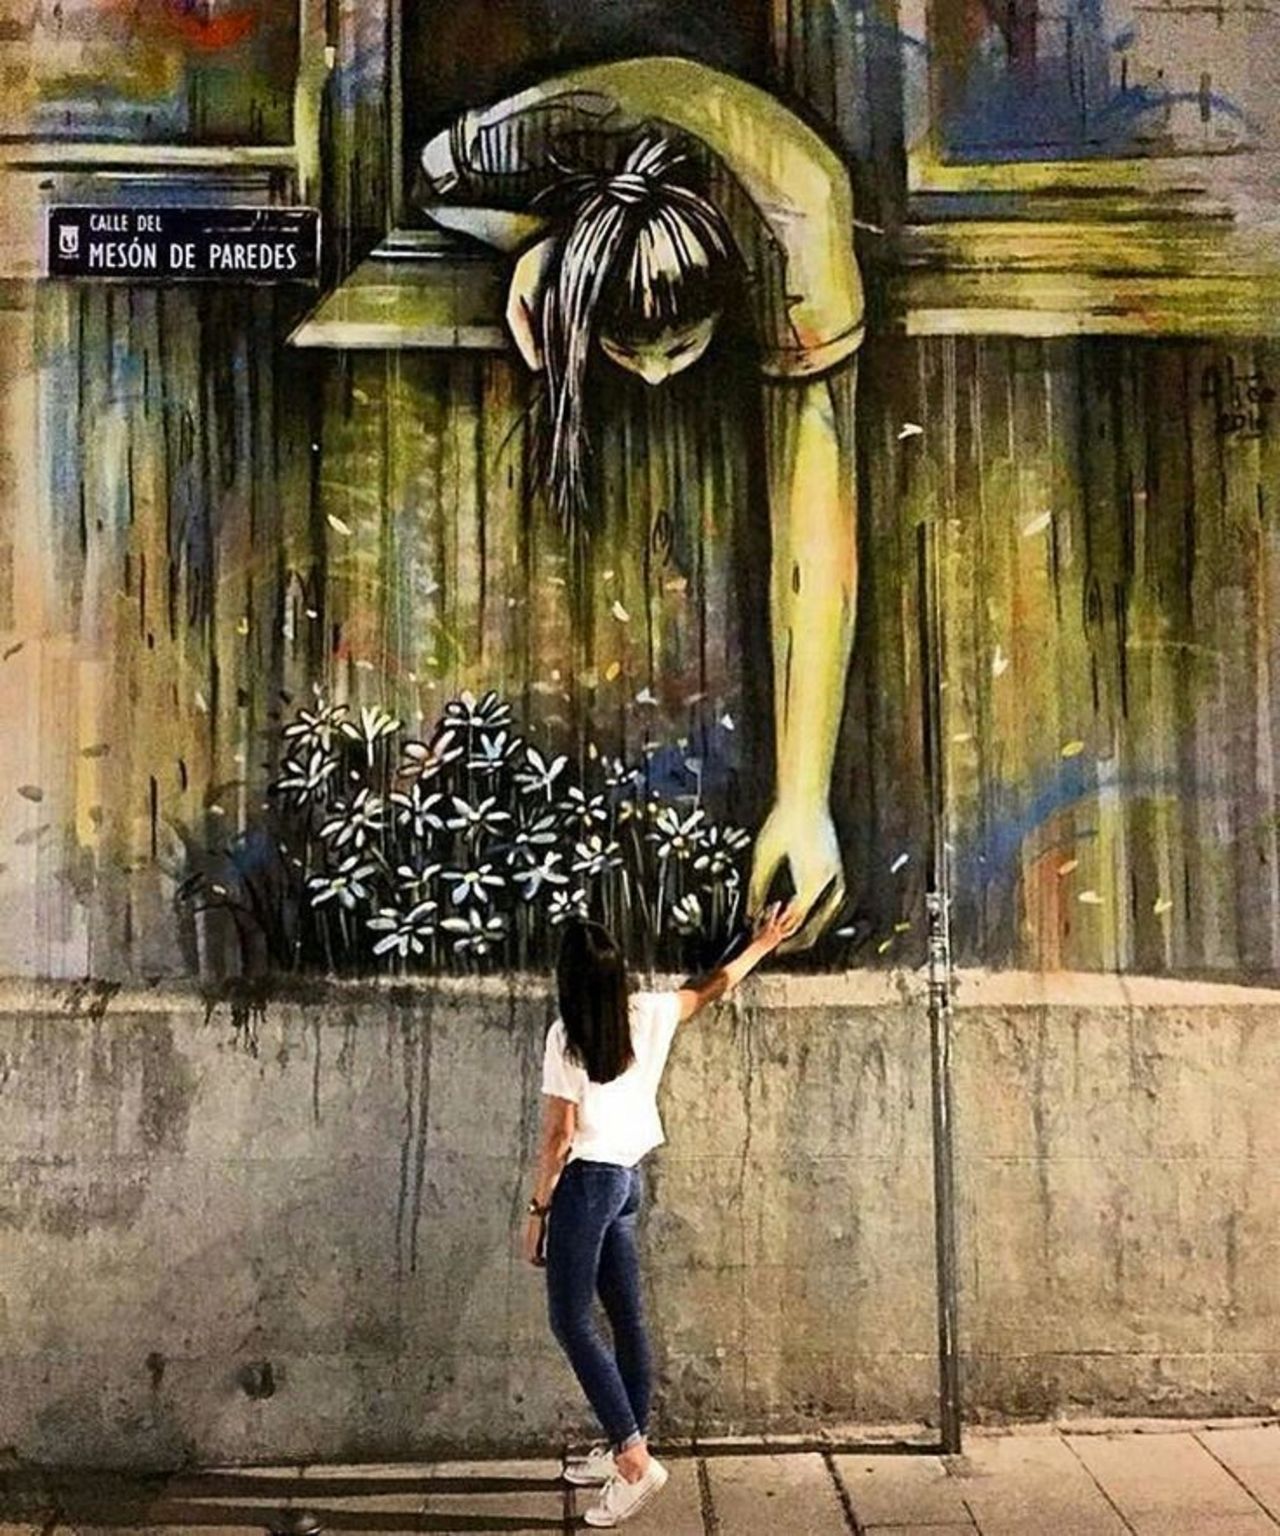 Mural by Alice Pasquini in Madrid, Spain #streetart #mural #graffiti #art https://t.co/8tBUS7IQNJ